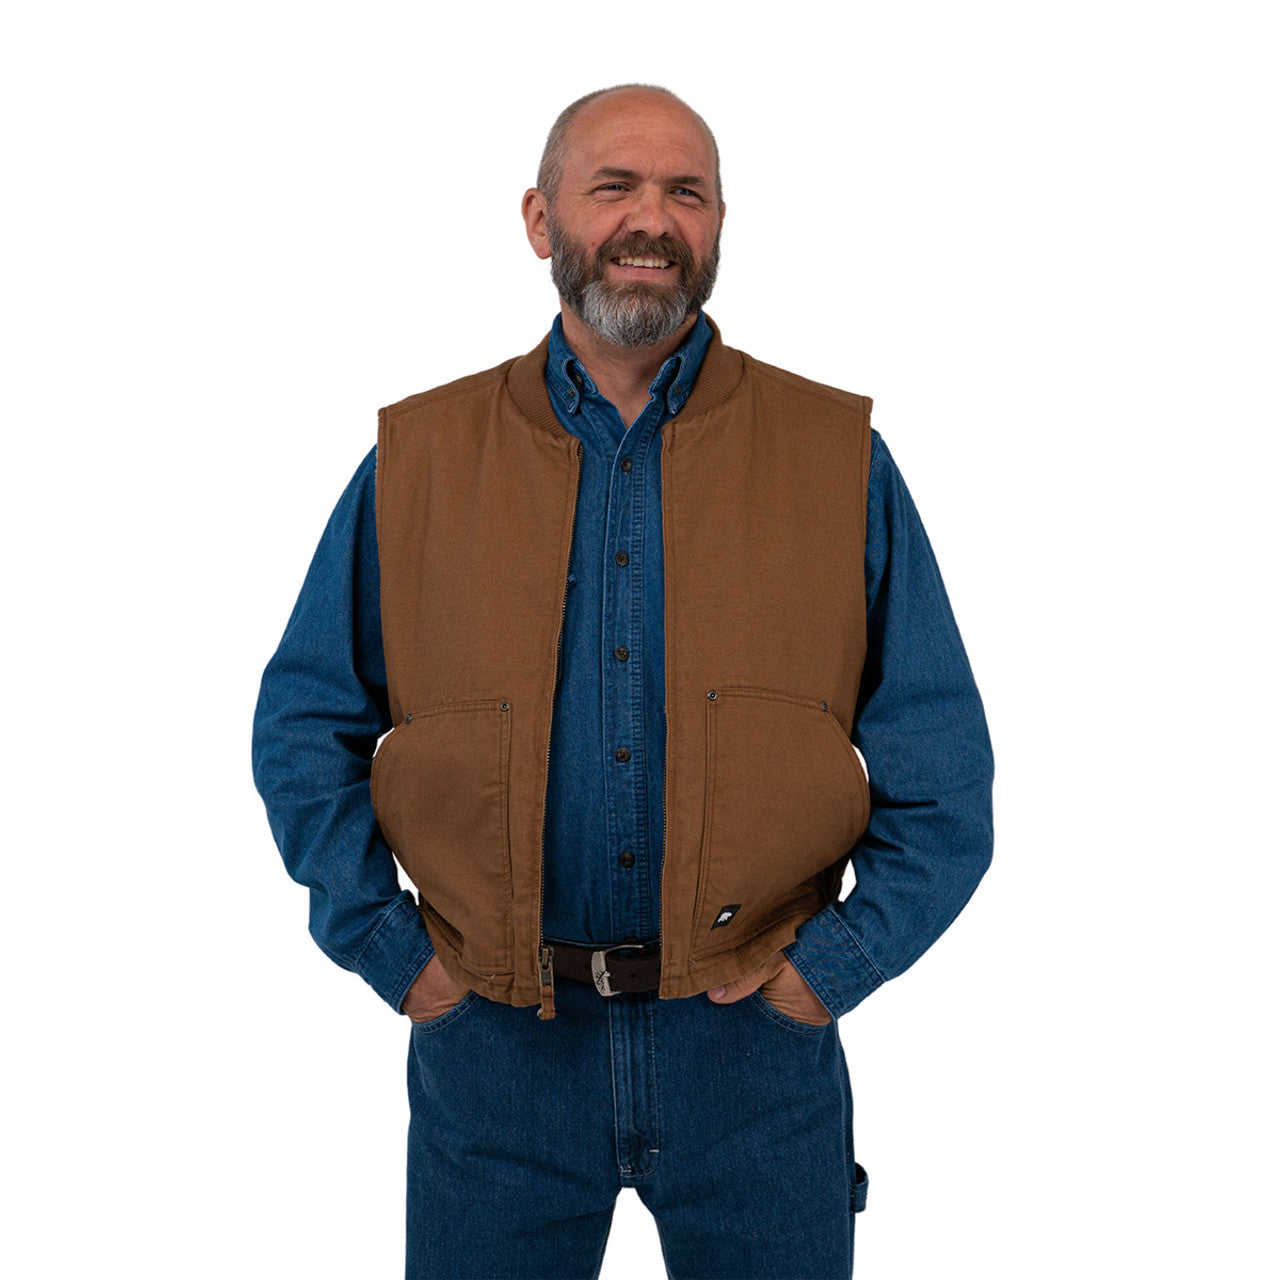 35.28 Premium Men's Berber Lined Vest by Key Industries